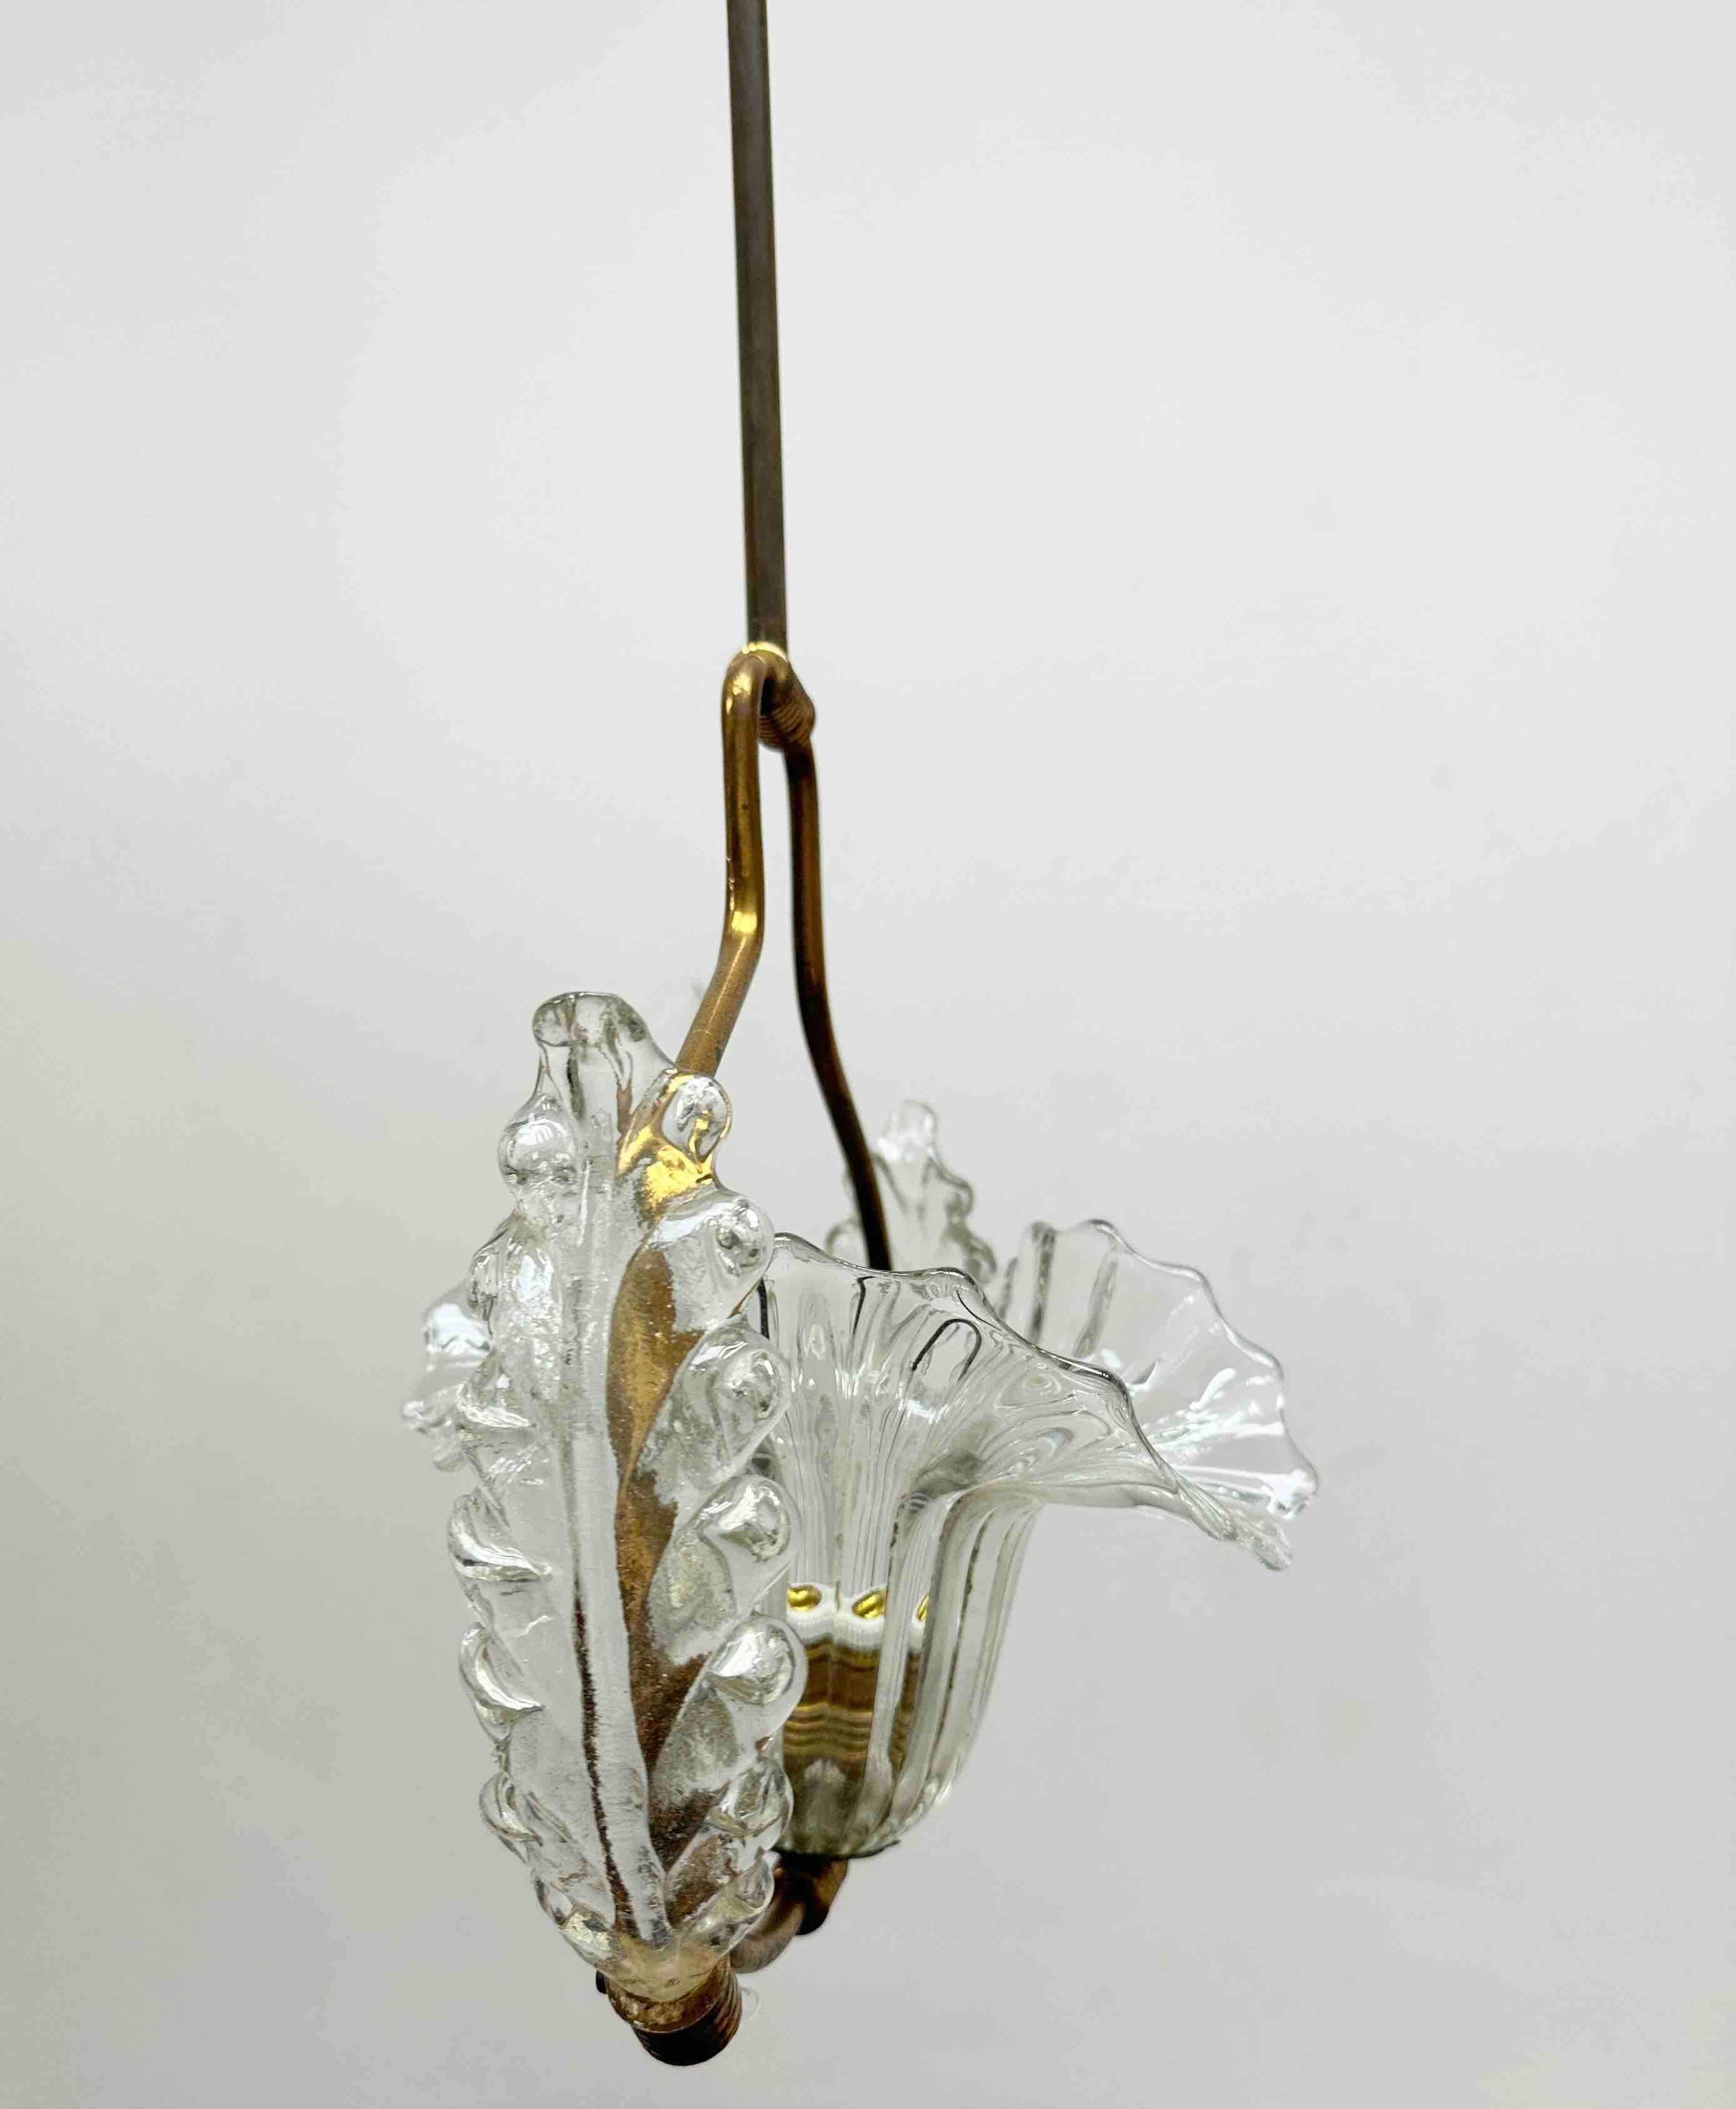 Petite Barovier Toso Pendant Light Chandelier Murano Glass Basket, 1950s For Sale 4